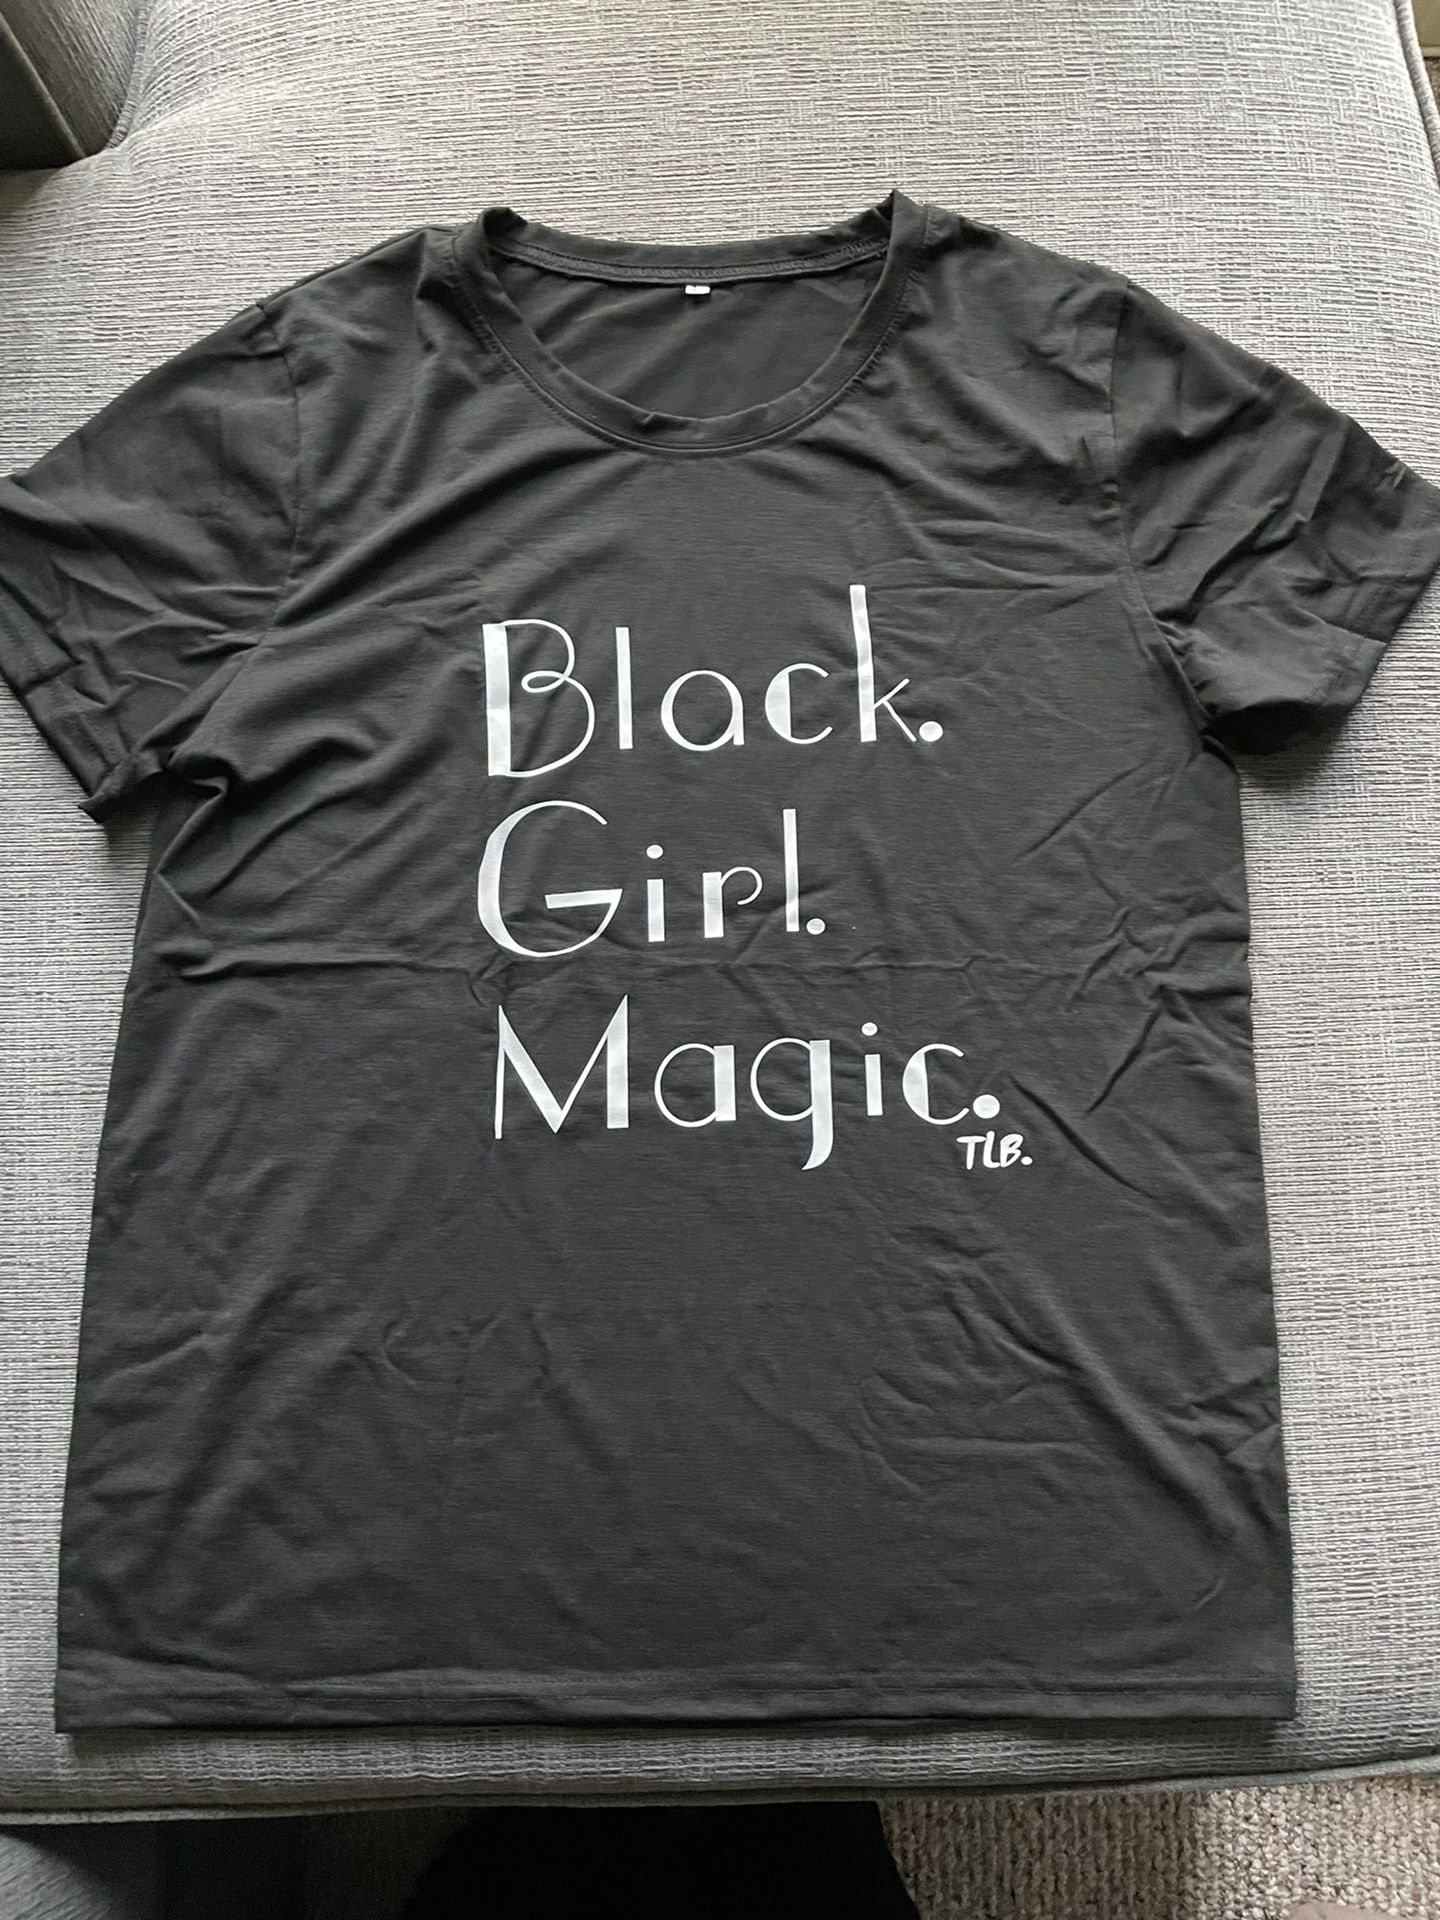 Black Girl Magic Letters Print Women Tshirts Cotton Casual Funny T-Shirt Sz. L